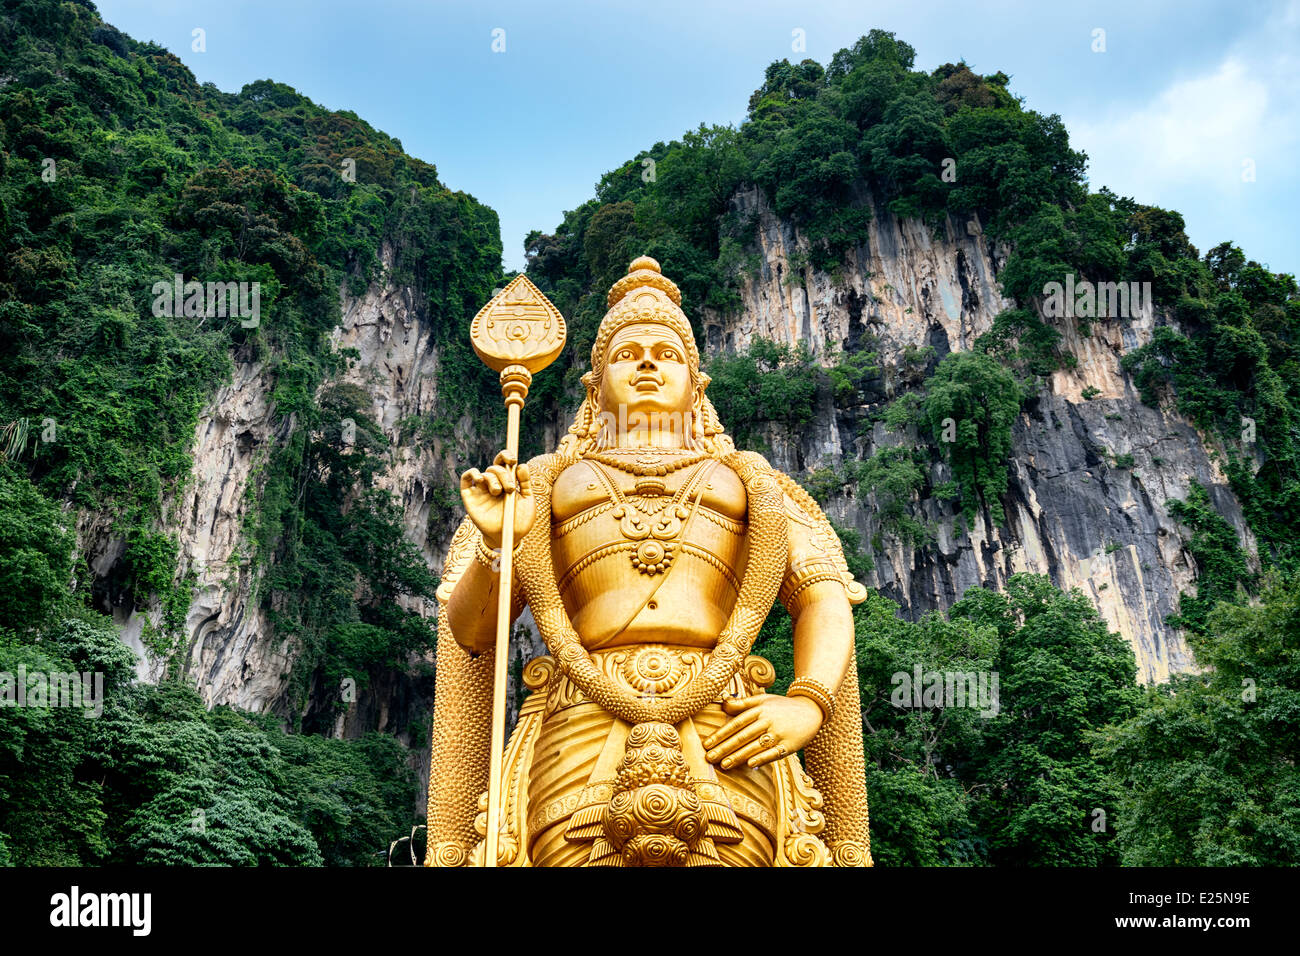 The world's tallest statue of Murugan, is located outside Batu Caves. Kuala Lumpur - Malaysia. Stock Photo